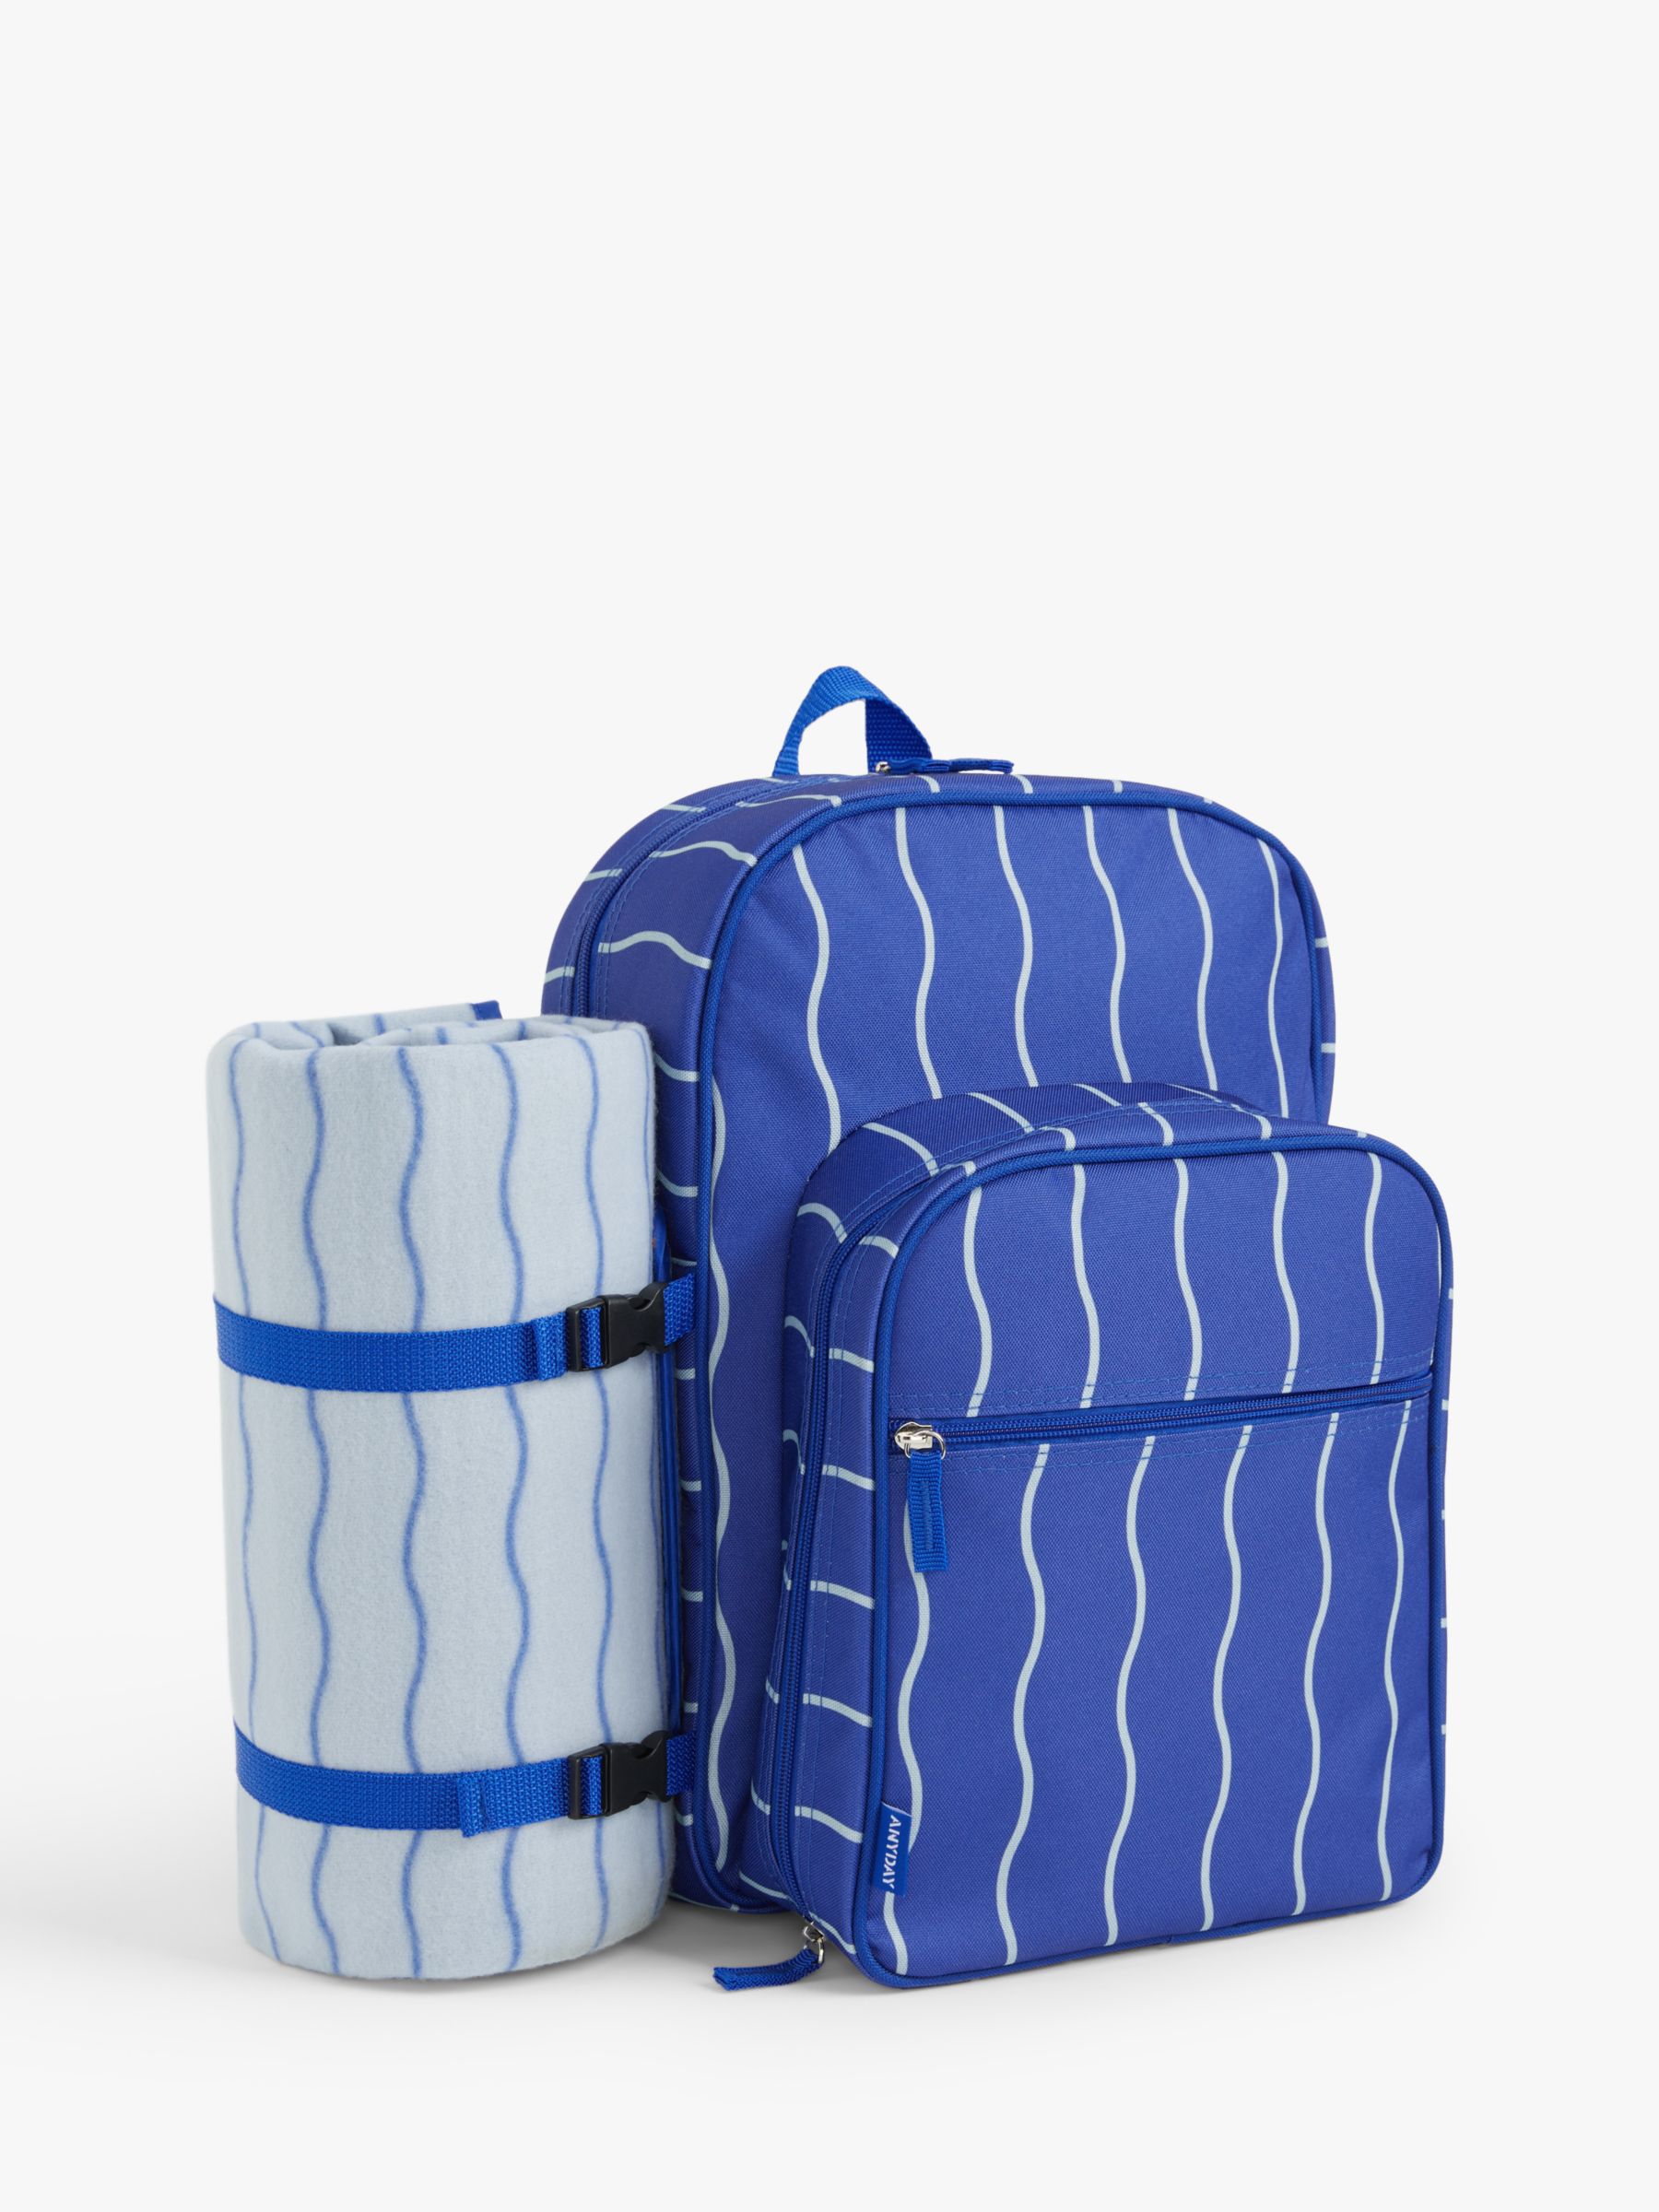 John Lewis High Summer Roll Top Picnic Cooler Bag, 30L, Blue/Multi